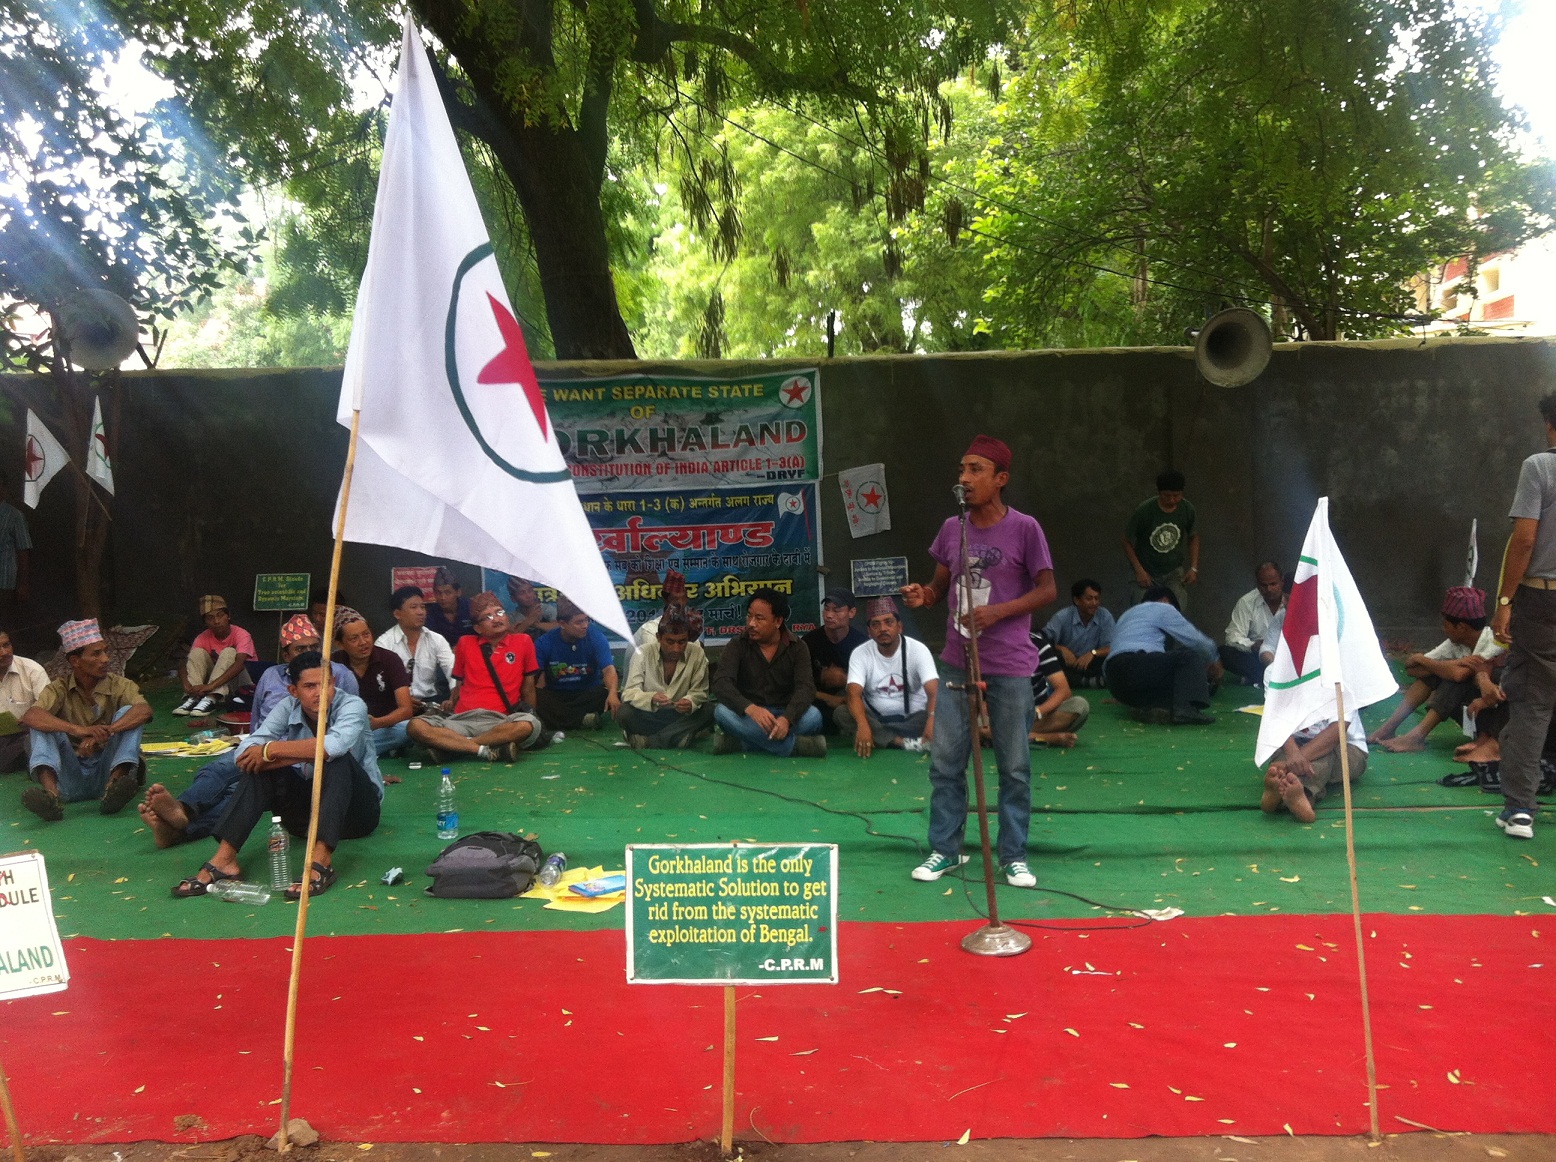 Ghorkha activists demands separate state Gorkhaland stages protest at Jantar Mantar in New Delhi